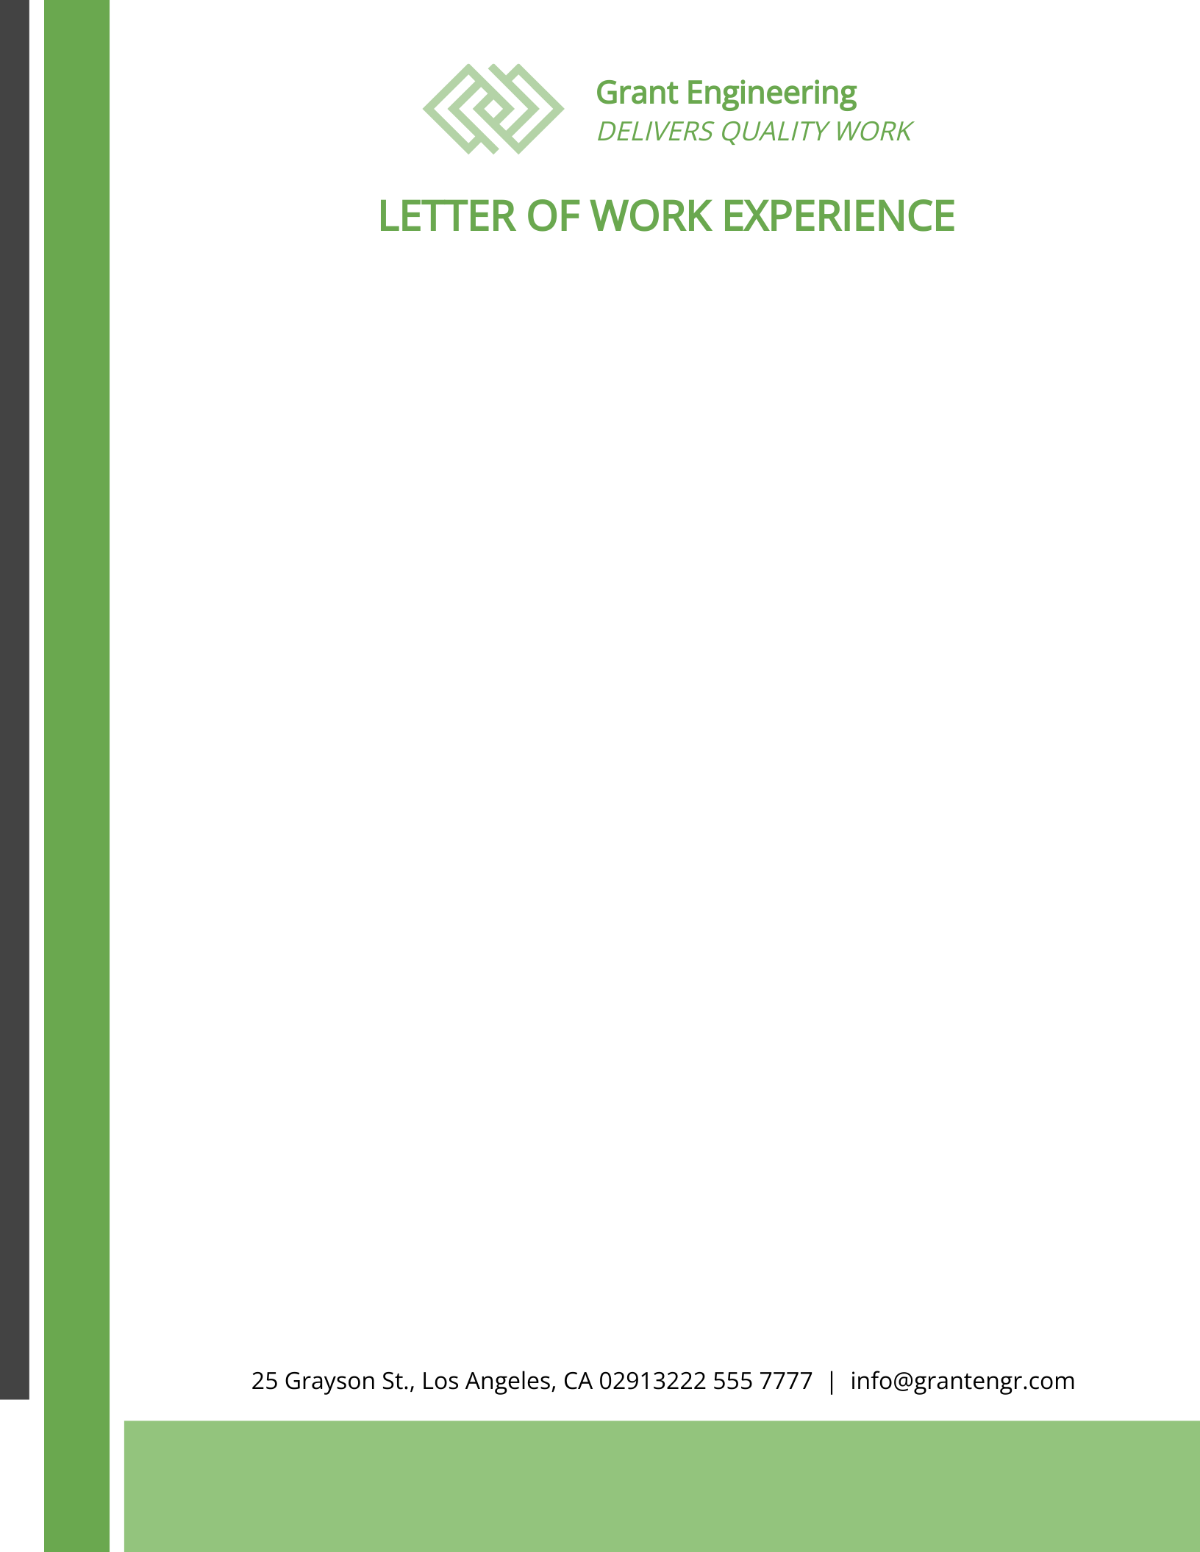 Work Experience Letterhead Template